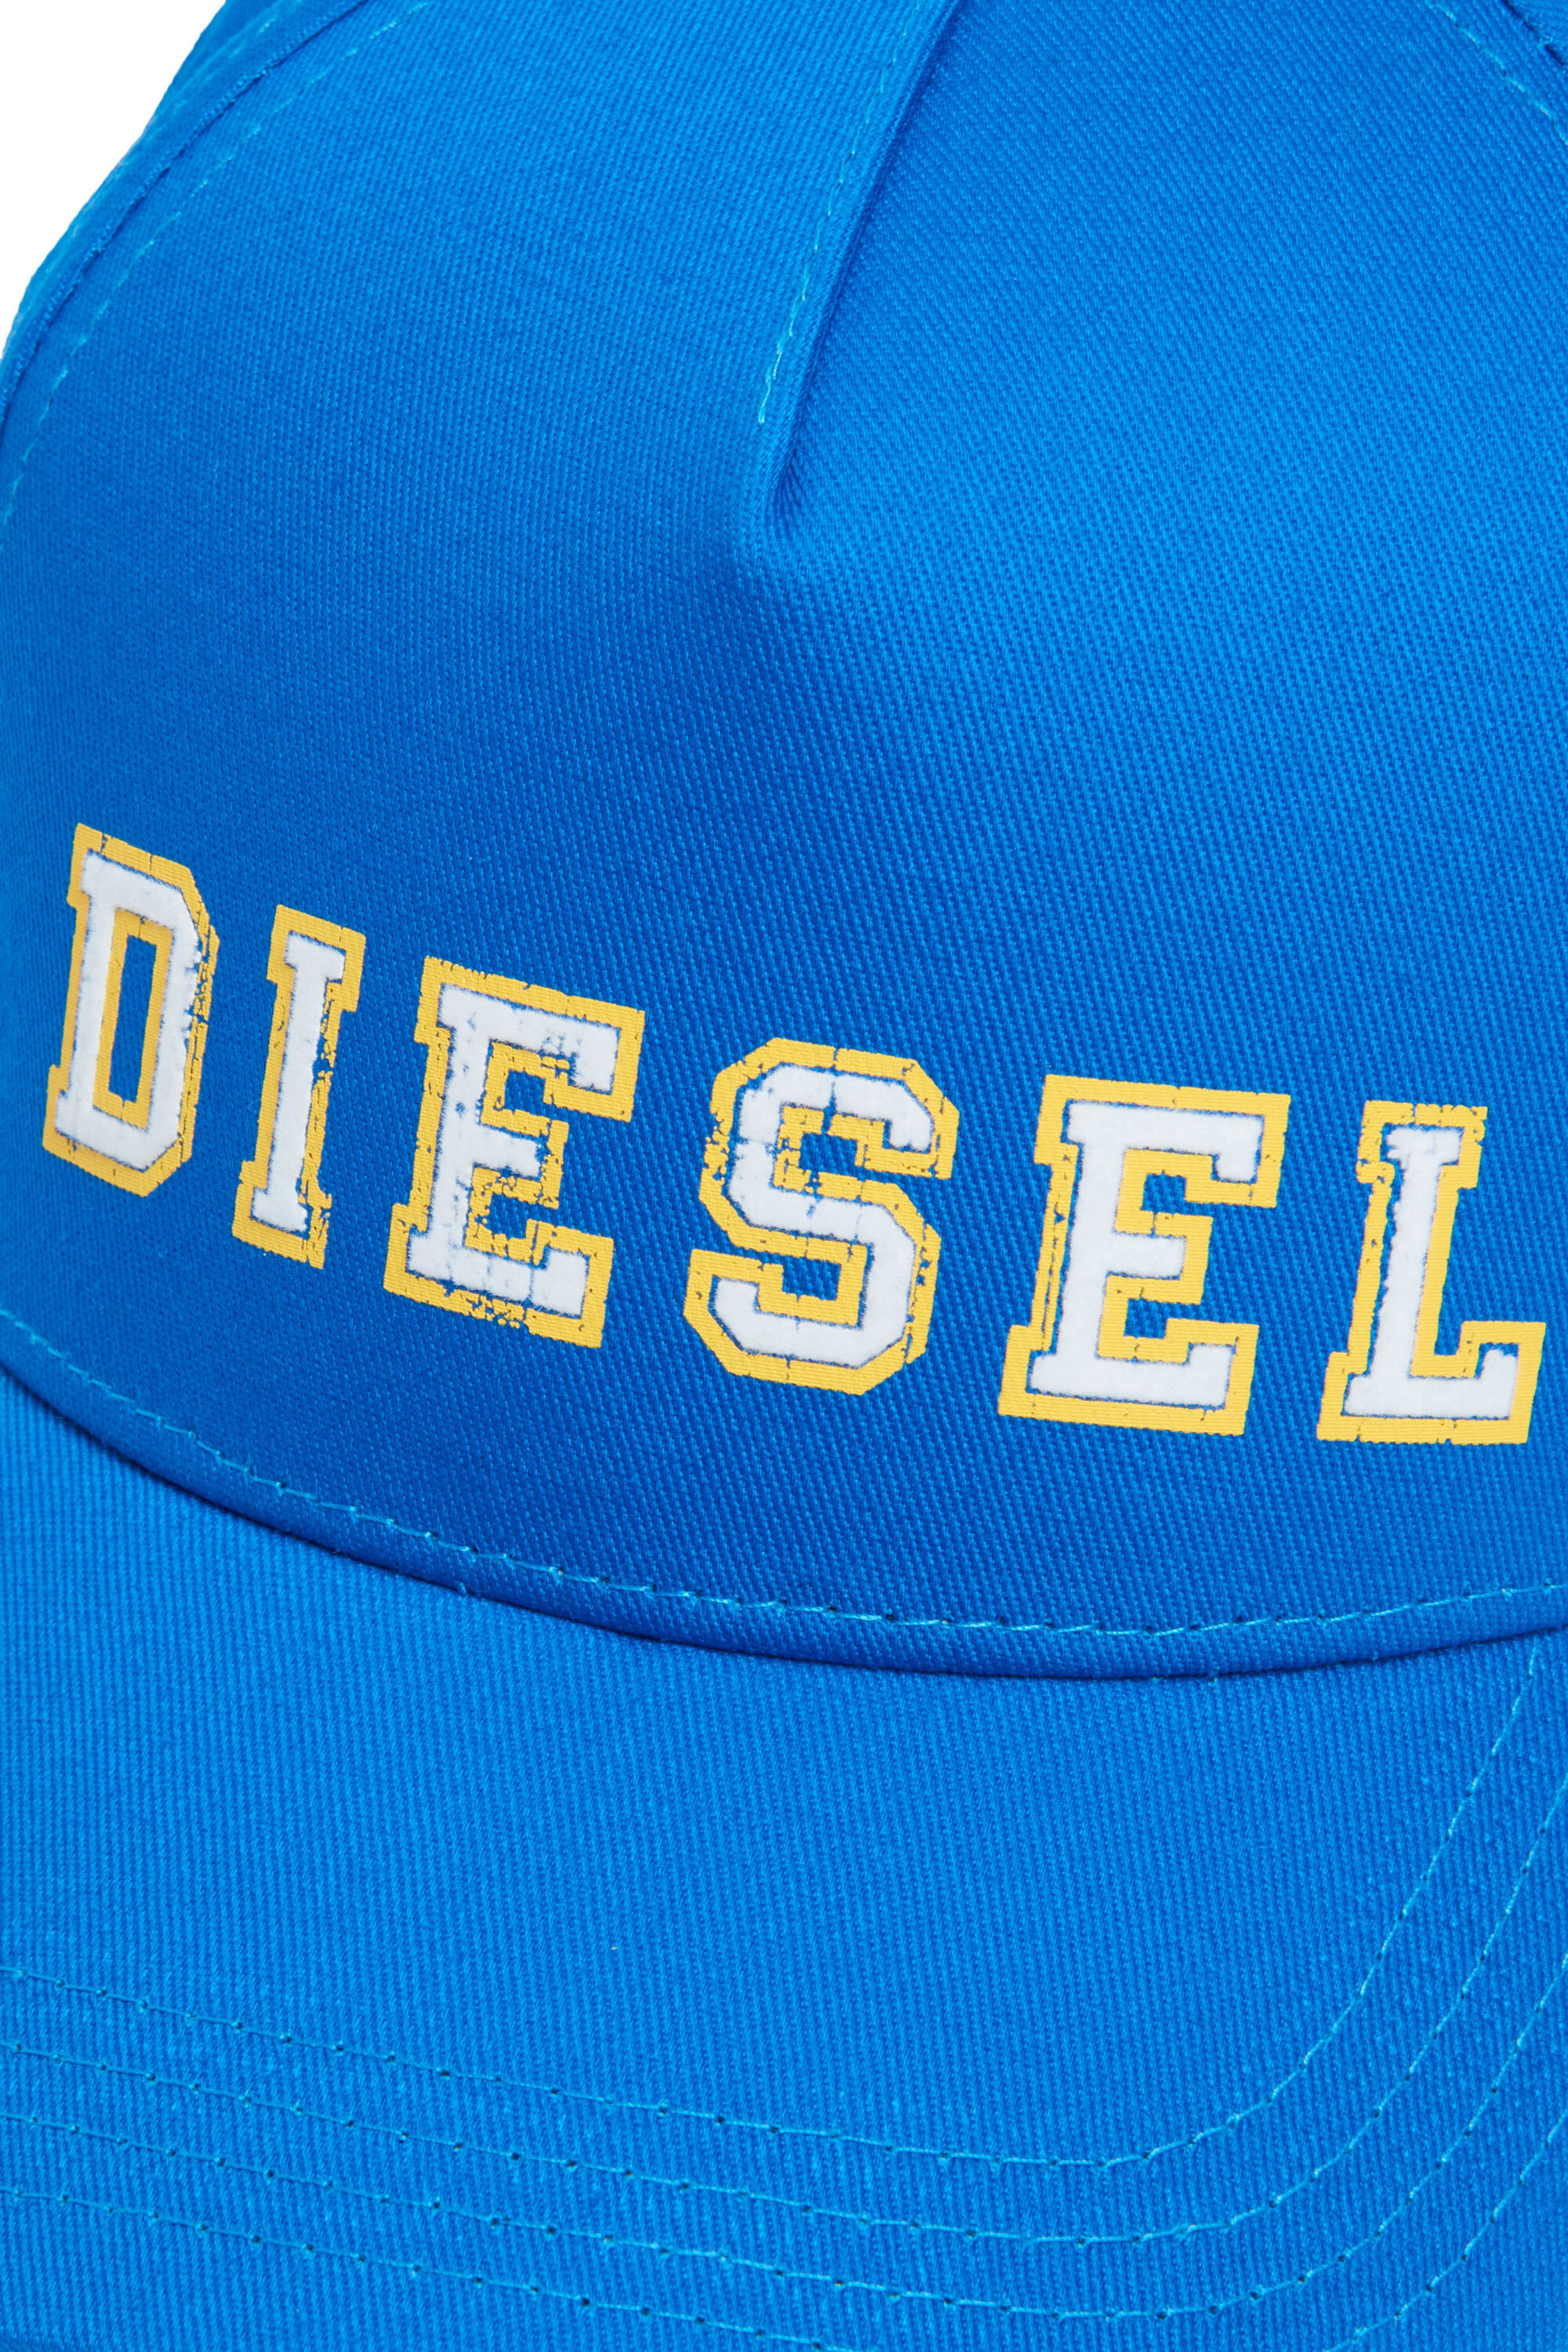 Diesel - FHOK, Blue - Image 3